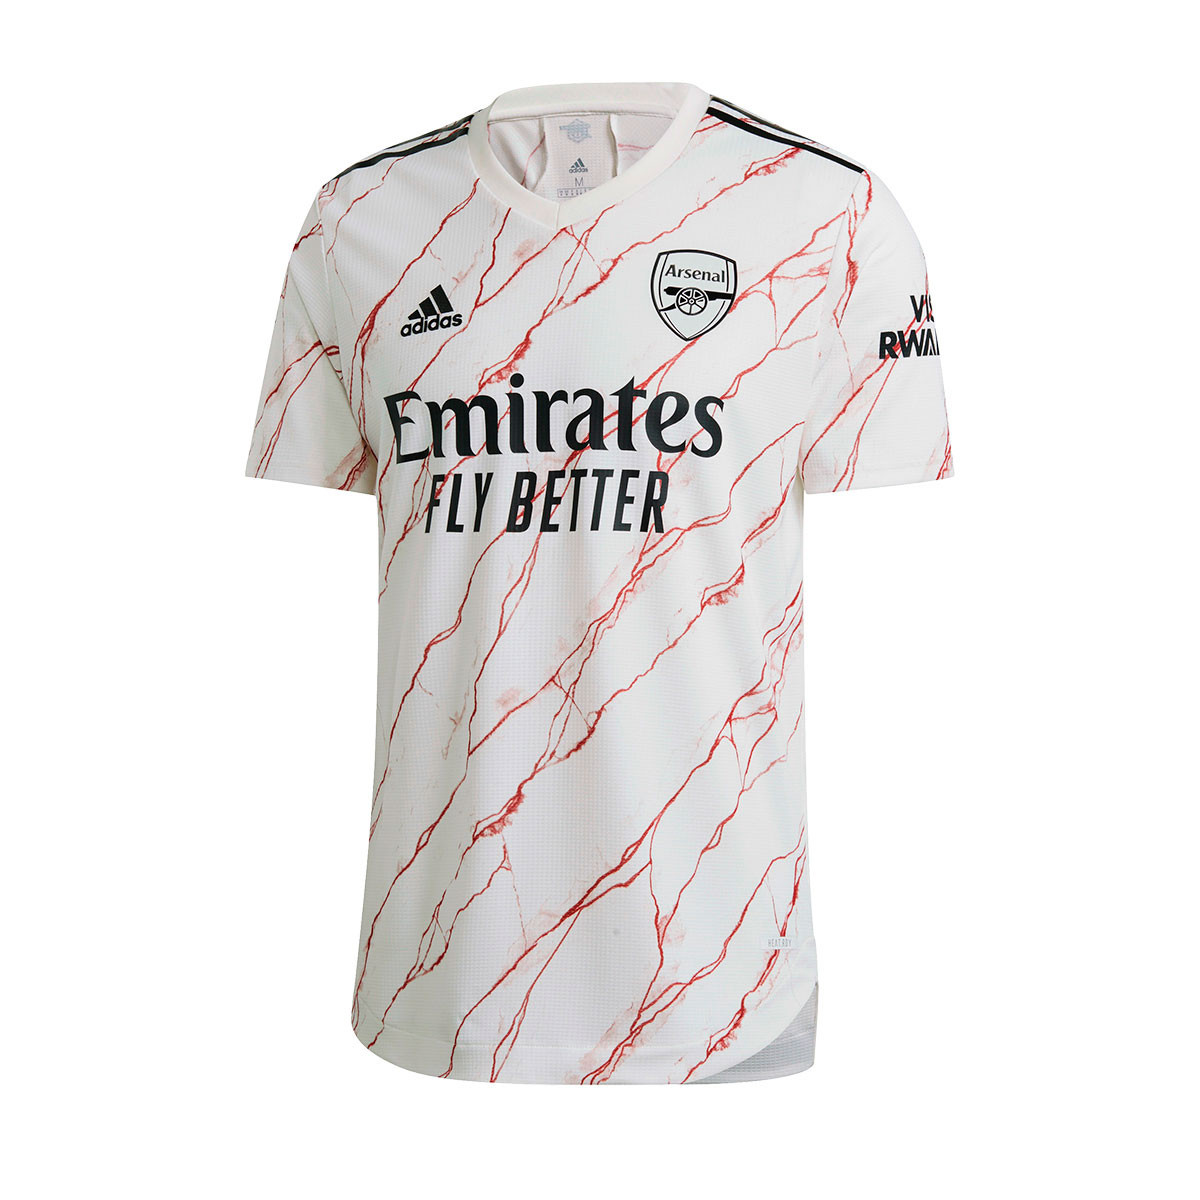 Jersey Adidas Arsenal Fc 2020 2021 Away Cloud White Black Football Store Futbol Emotion